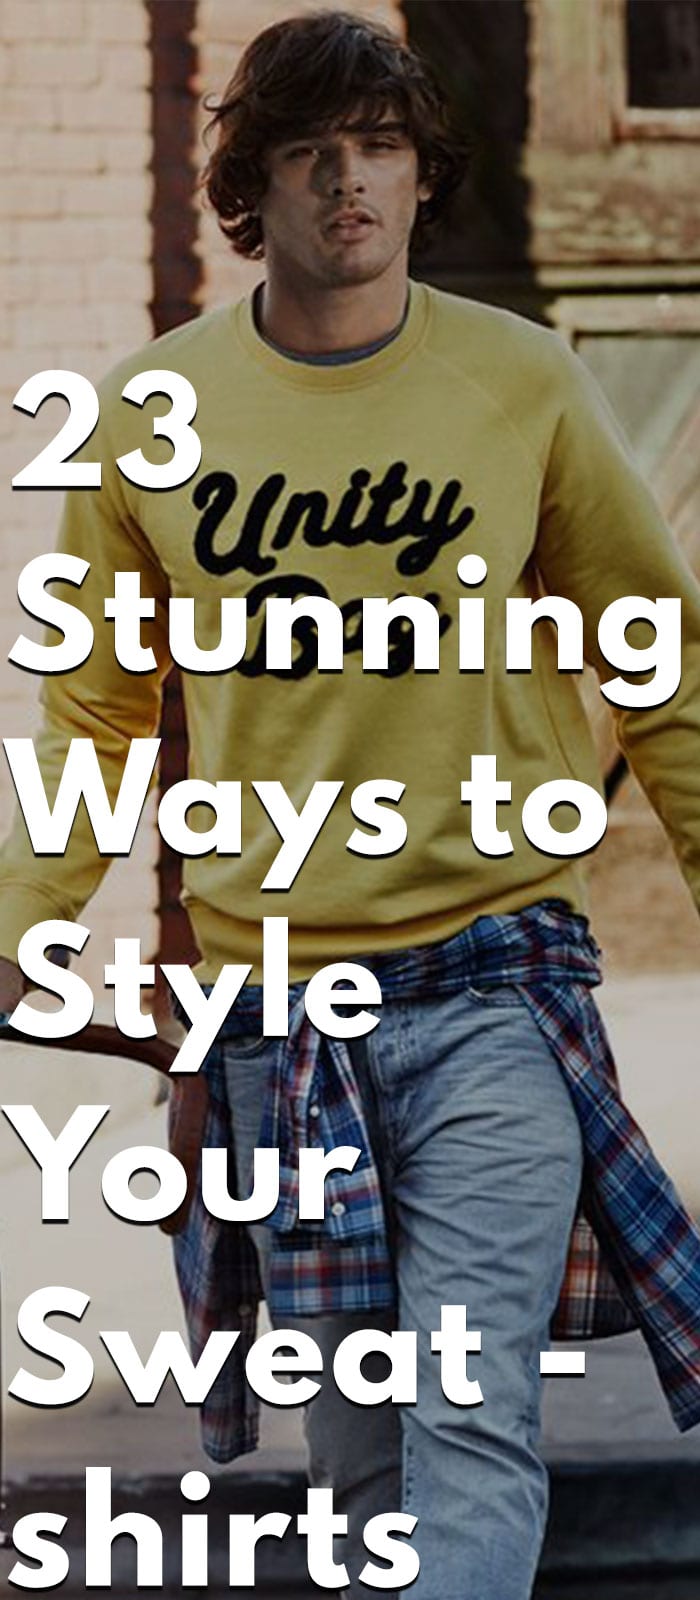 23-Stunning-Ways-to-Style-Your-Sweatshirts